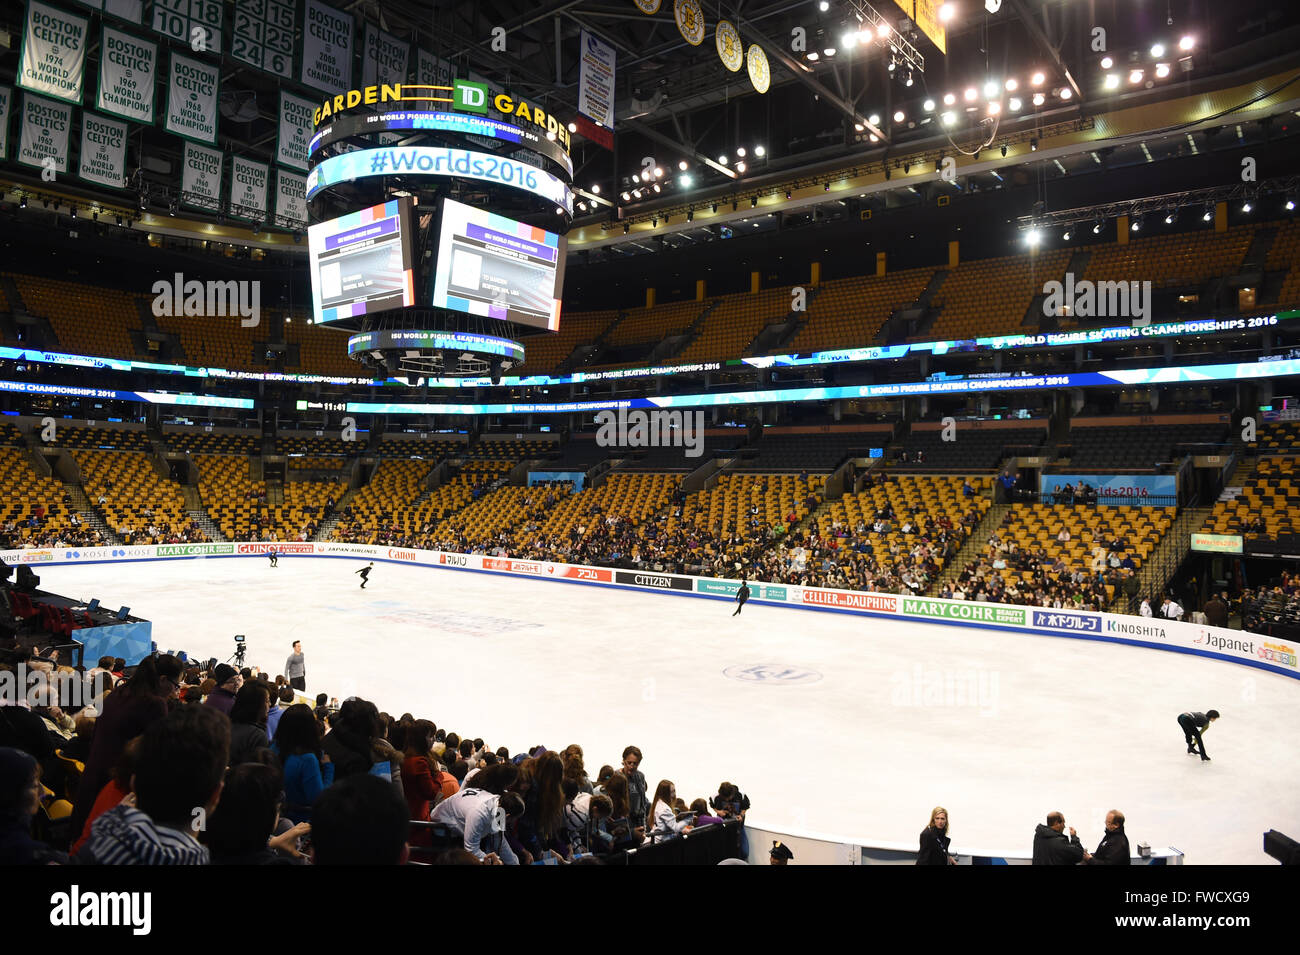 TD Garden skates into future with techy pro shop – Boston Herald